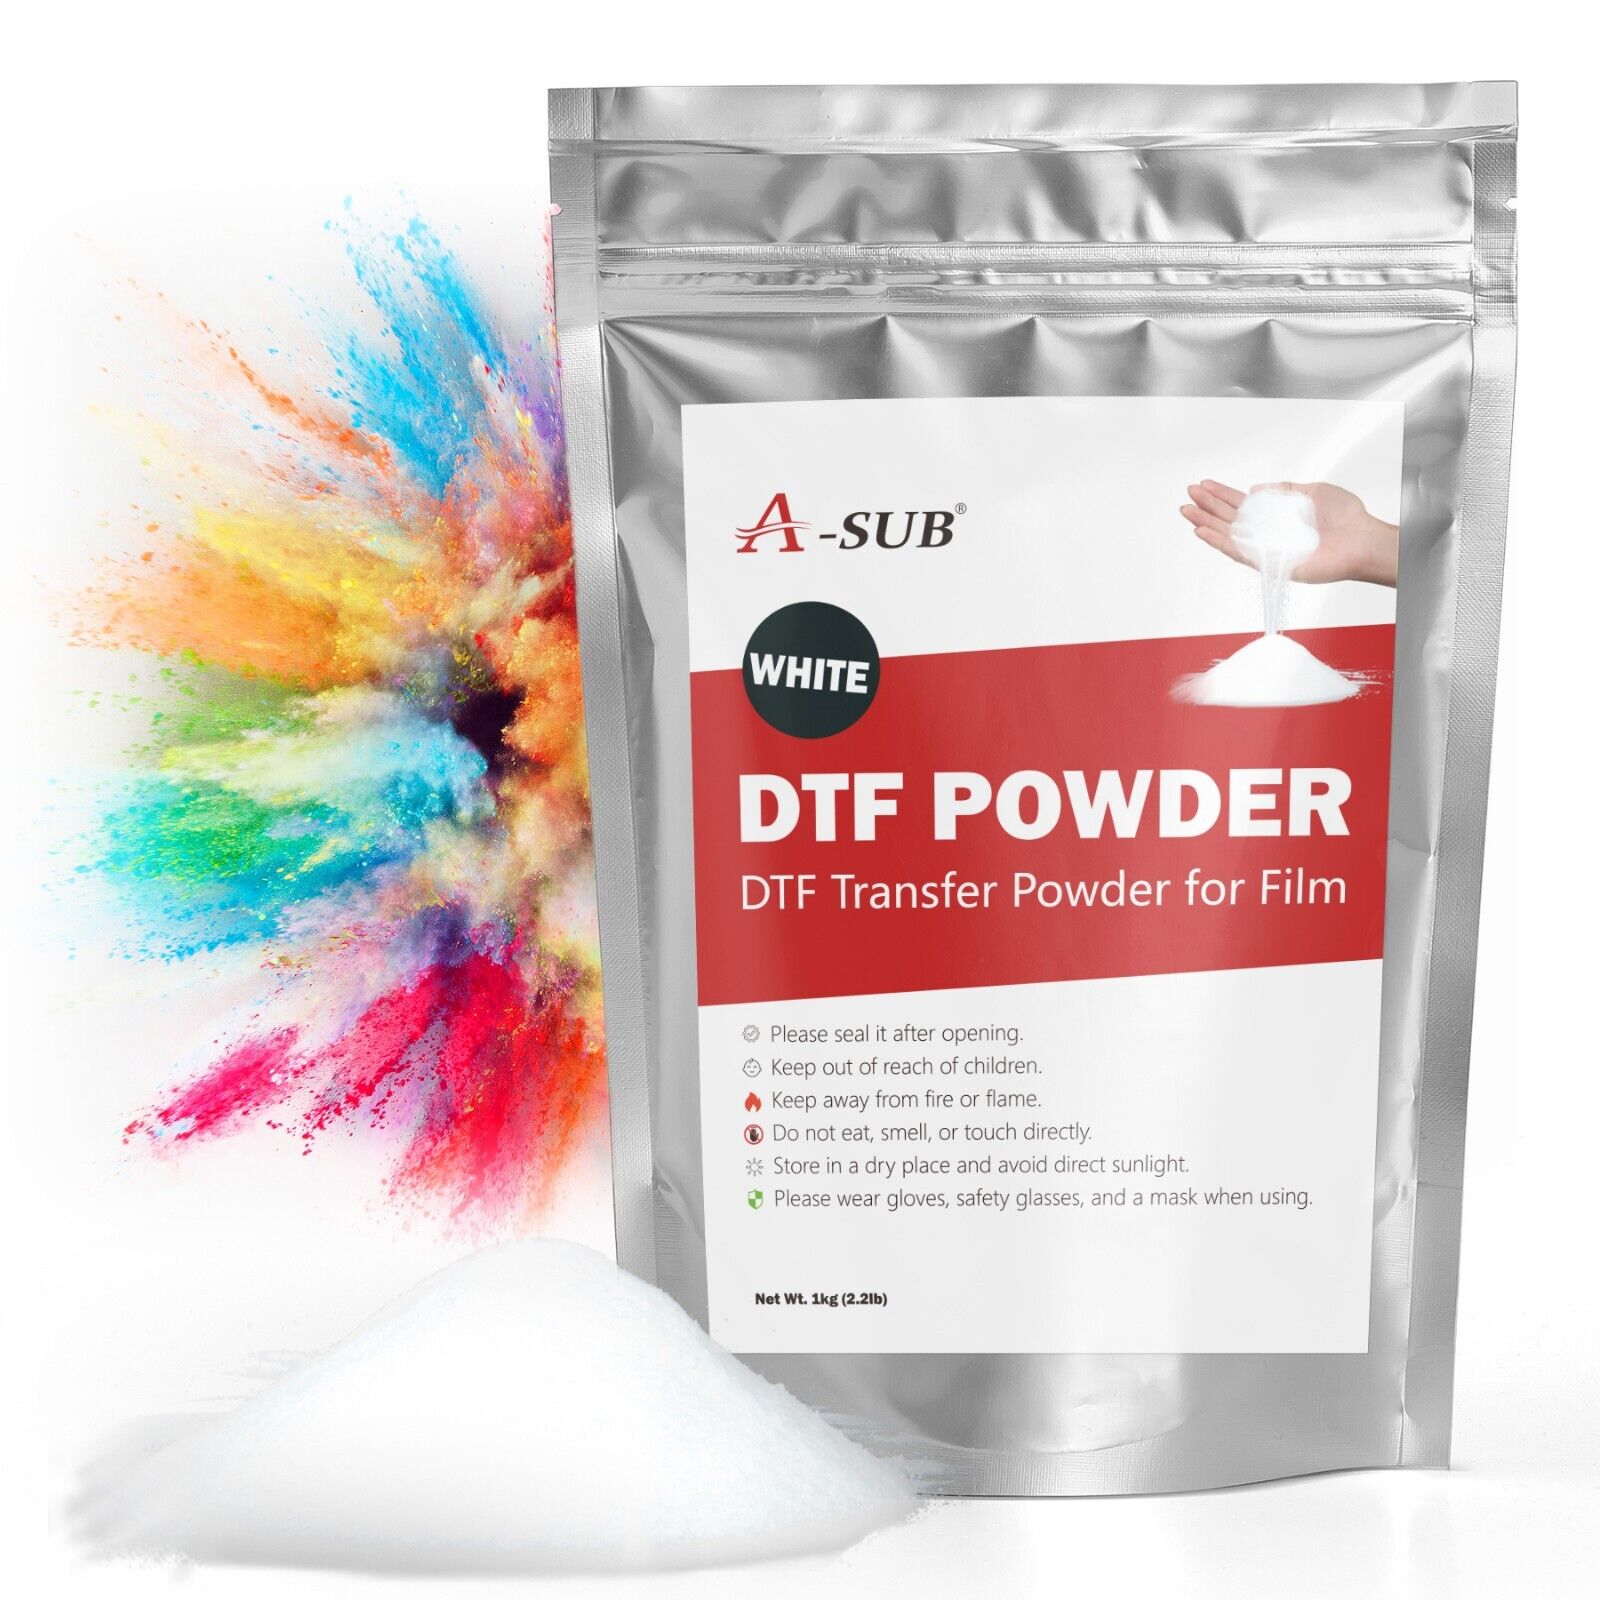 A-SUB DTF Powder for Sublimation,  44 LB Bulk White DTF Powder, 20 Packs